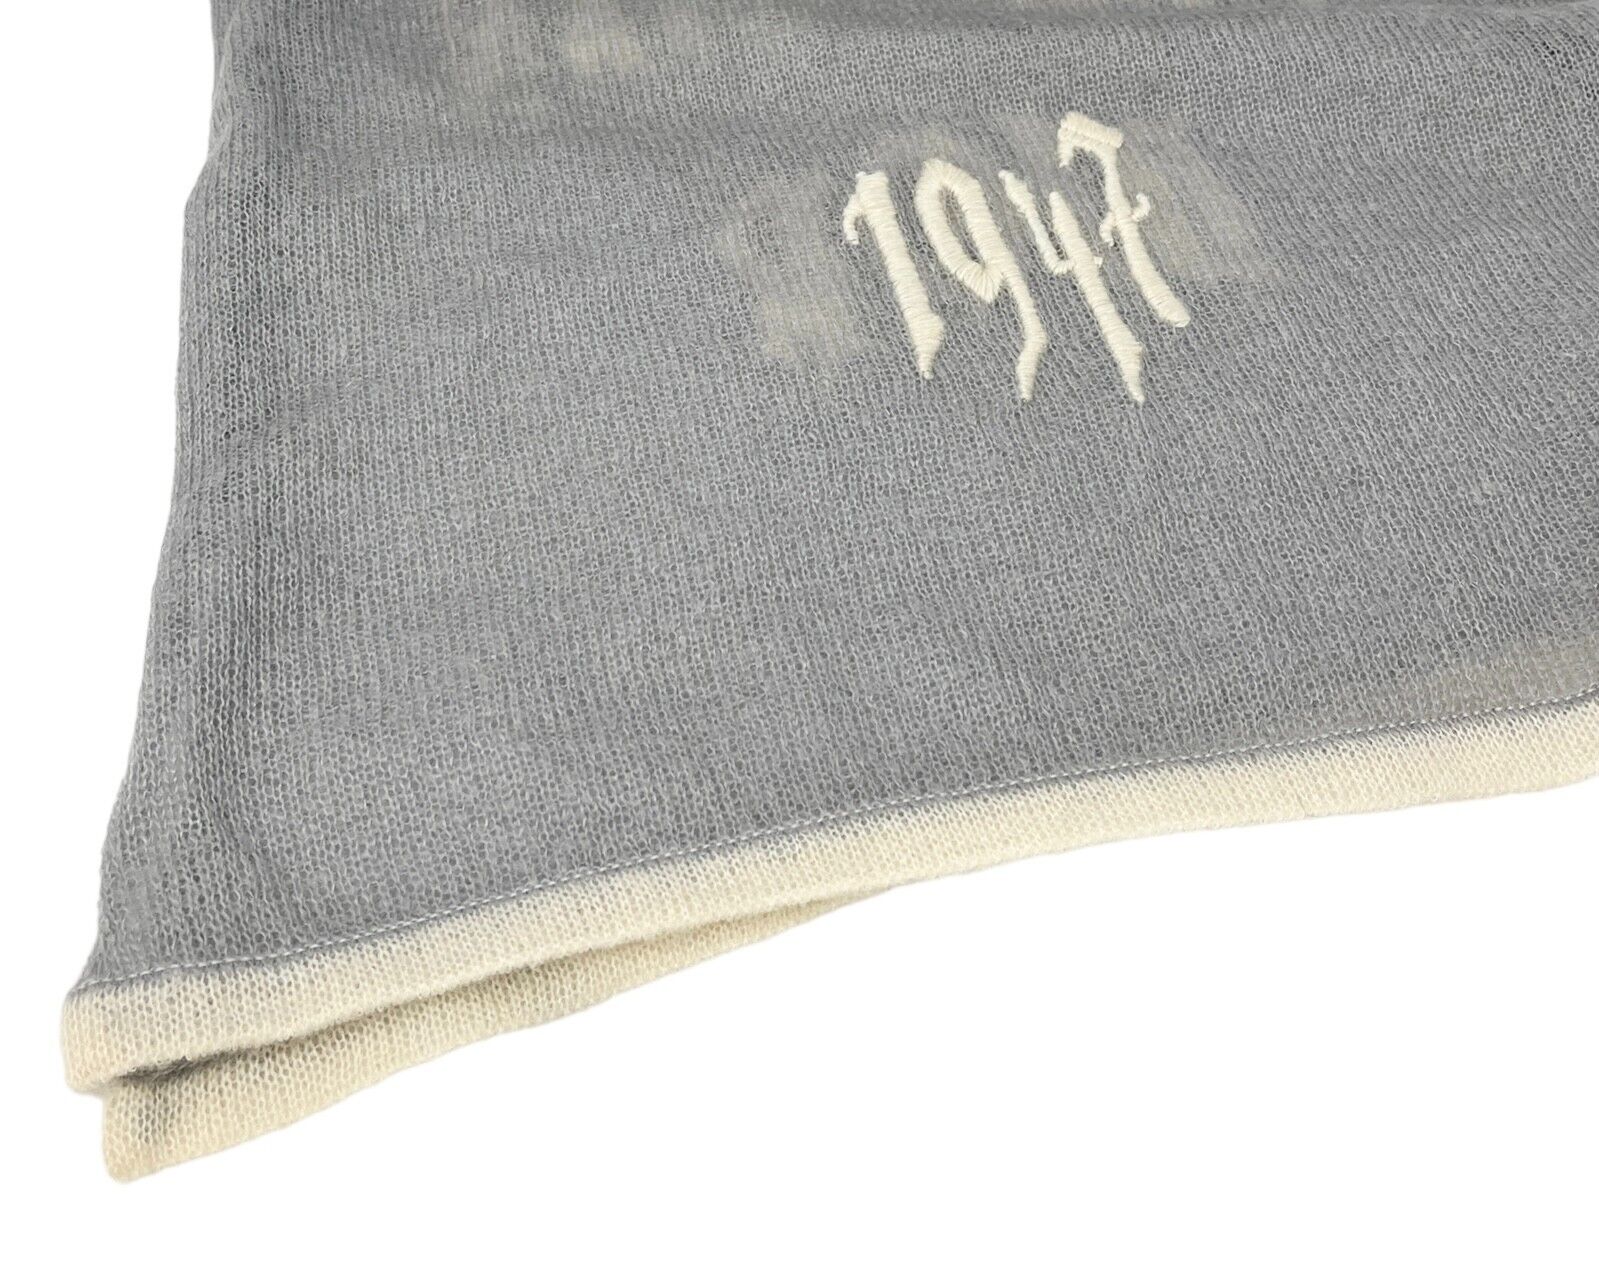 Christian Dior Vintage Calligraphy Gothic Logo Scarf Wrap Gray Mohair RankAB